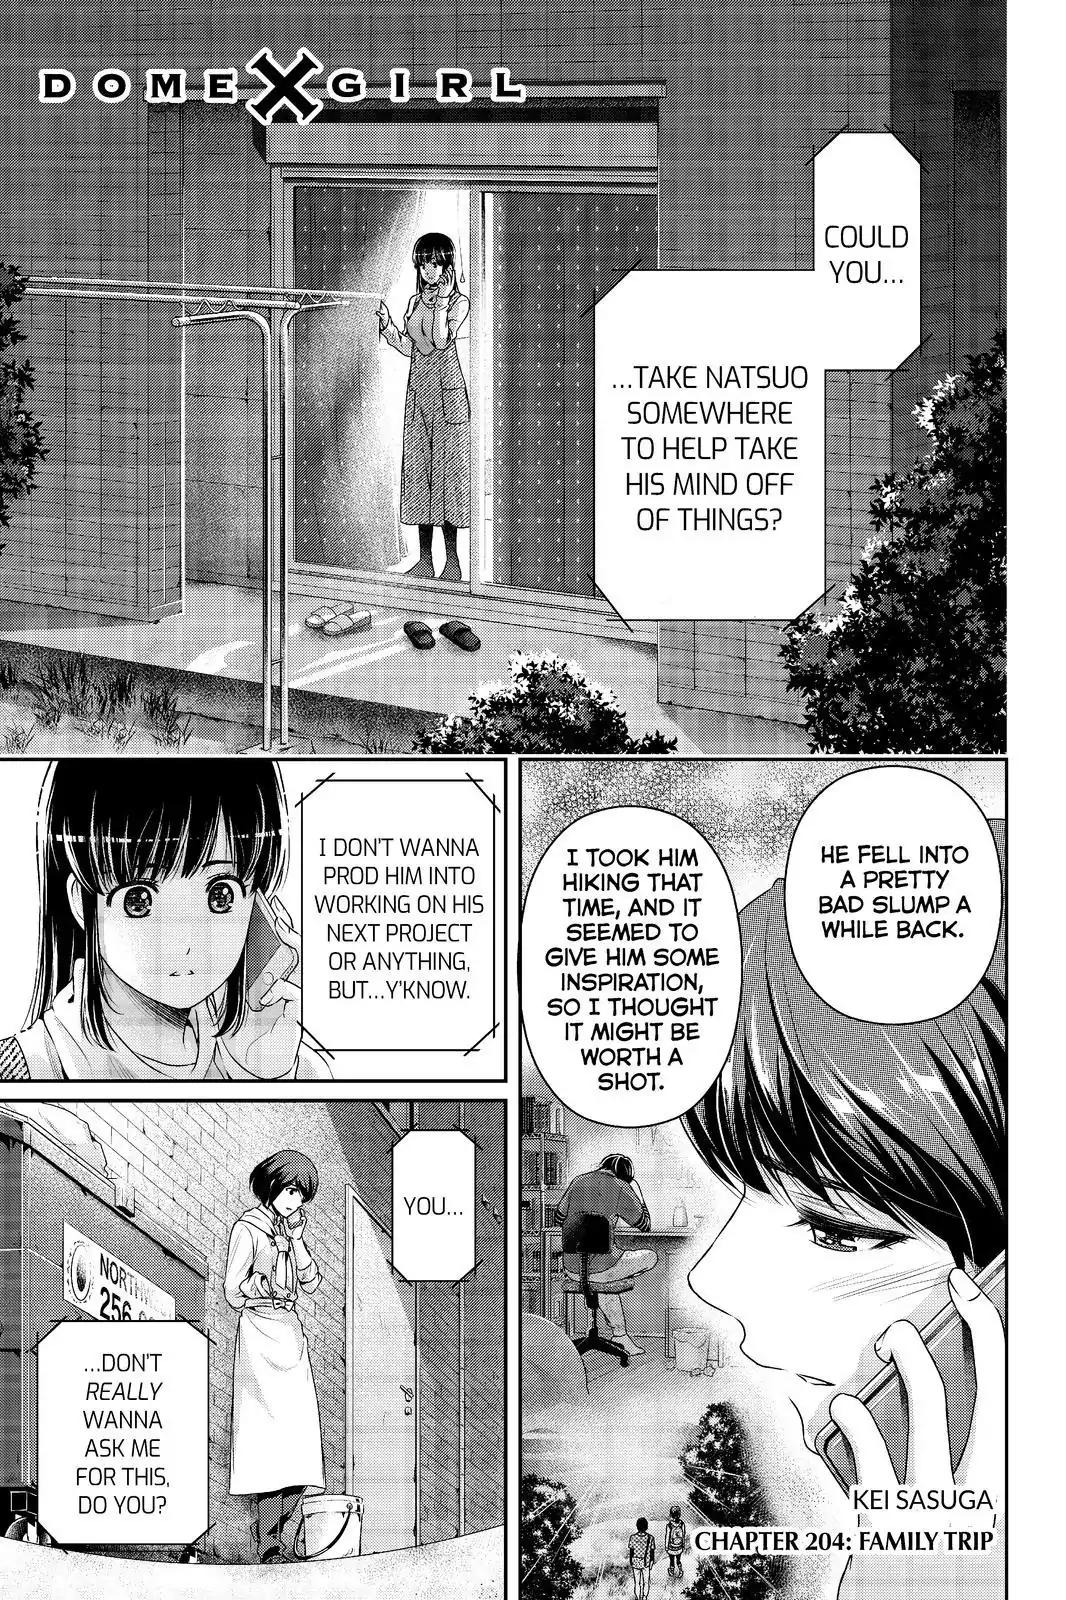 Domestic Girlfriend, Chapter 193 - Domestic Girlfriend Manga Online